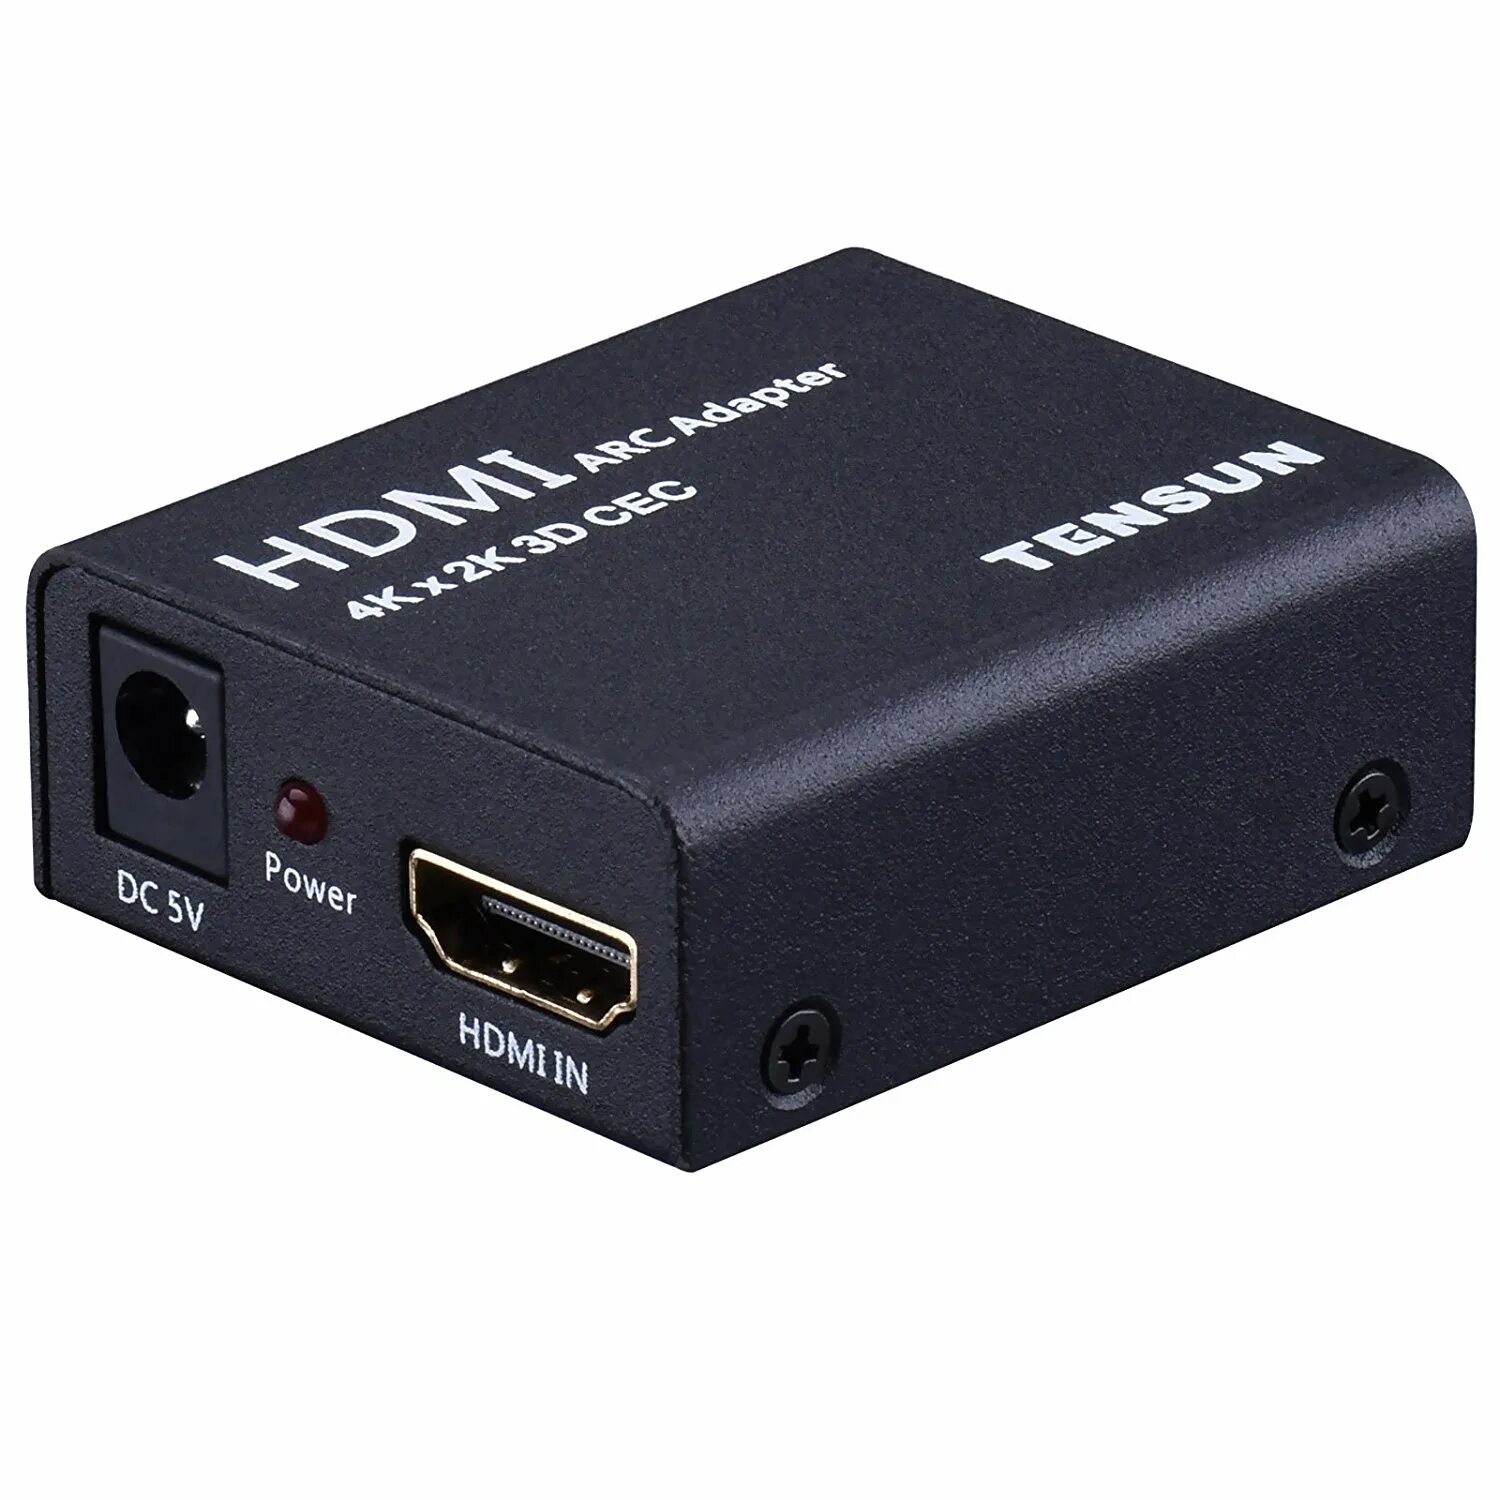 Earc arc. Arc HDMI Audio Converter. HDMI 1 Arc. HDMI Arc Toslink кабель. TV приставка HDMI Arc.